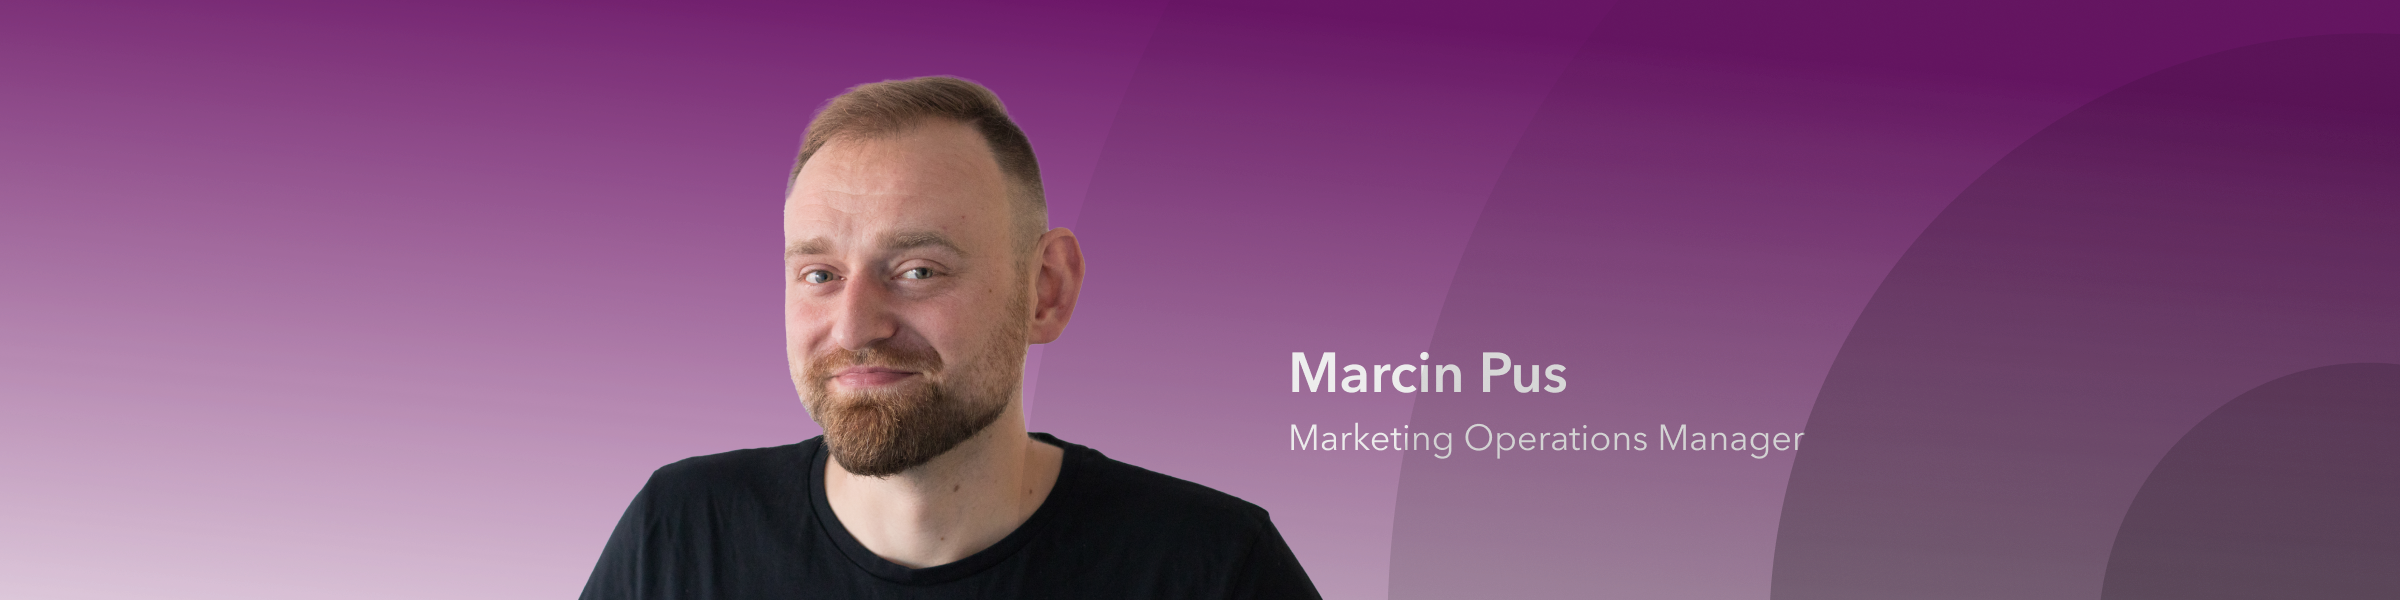 meet team openprovider: Marcin